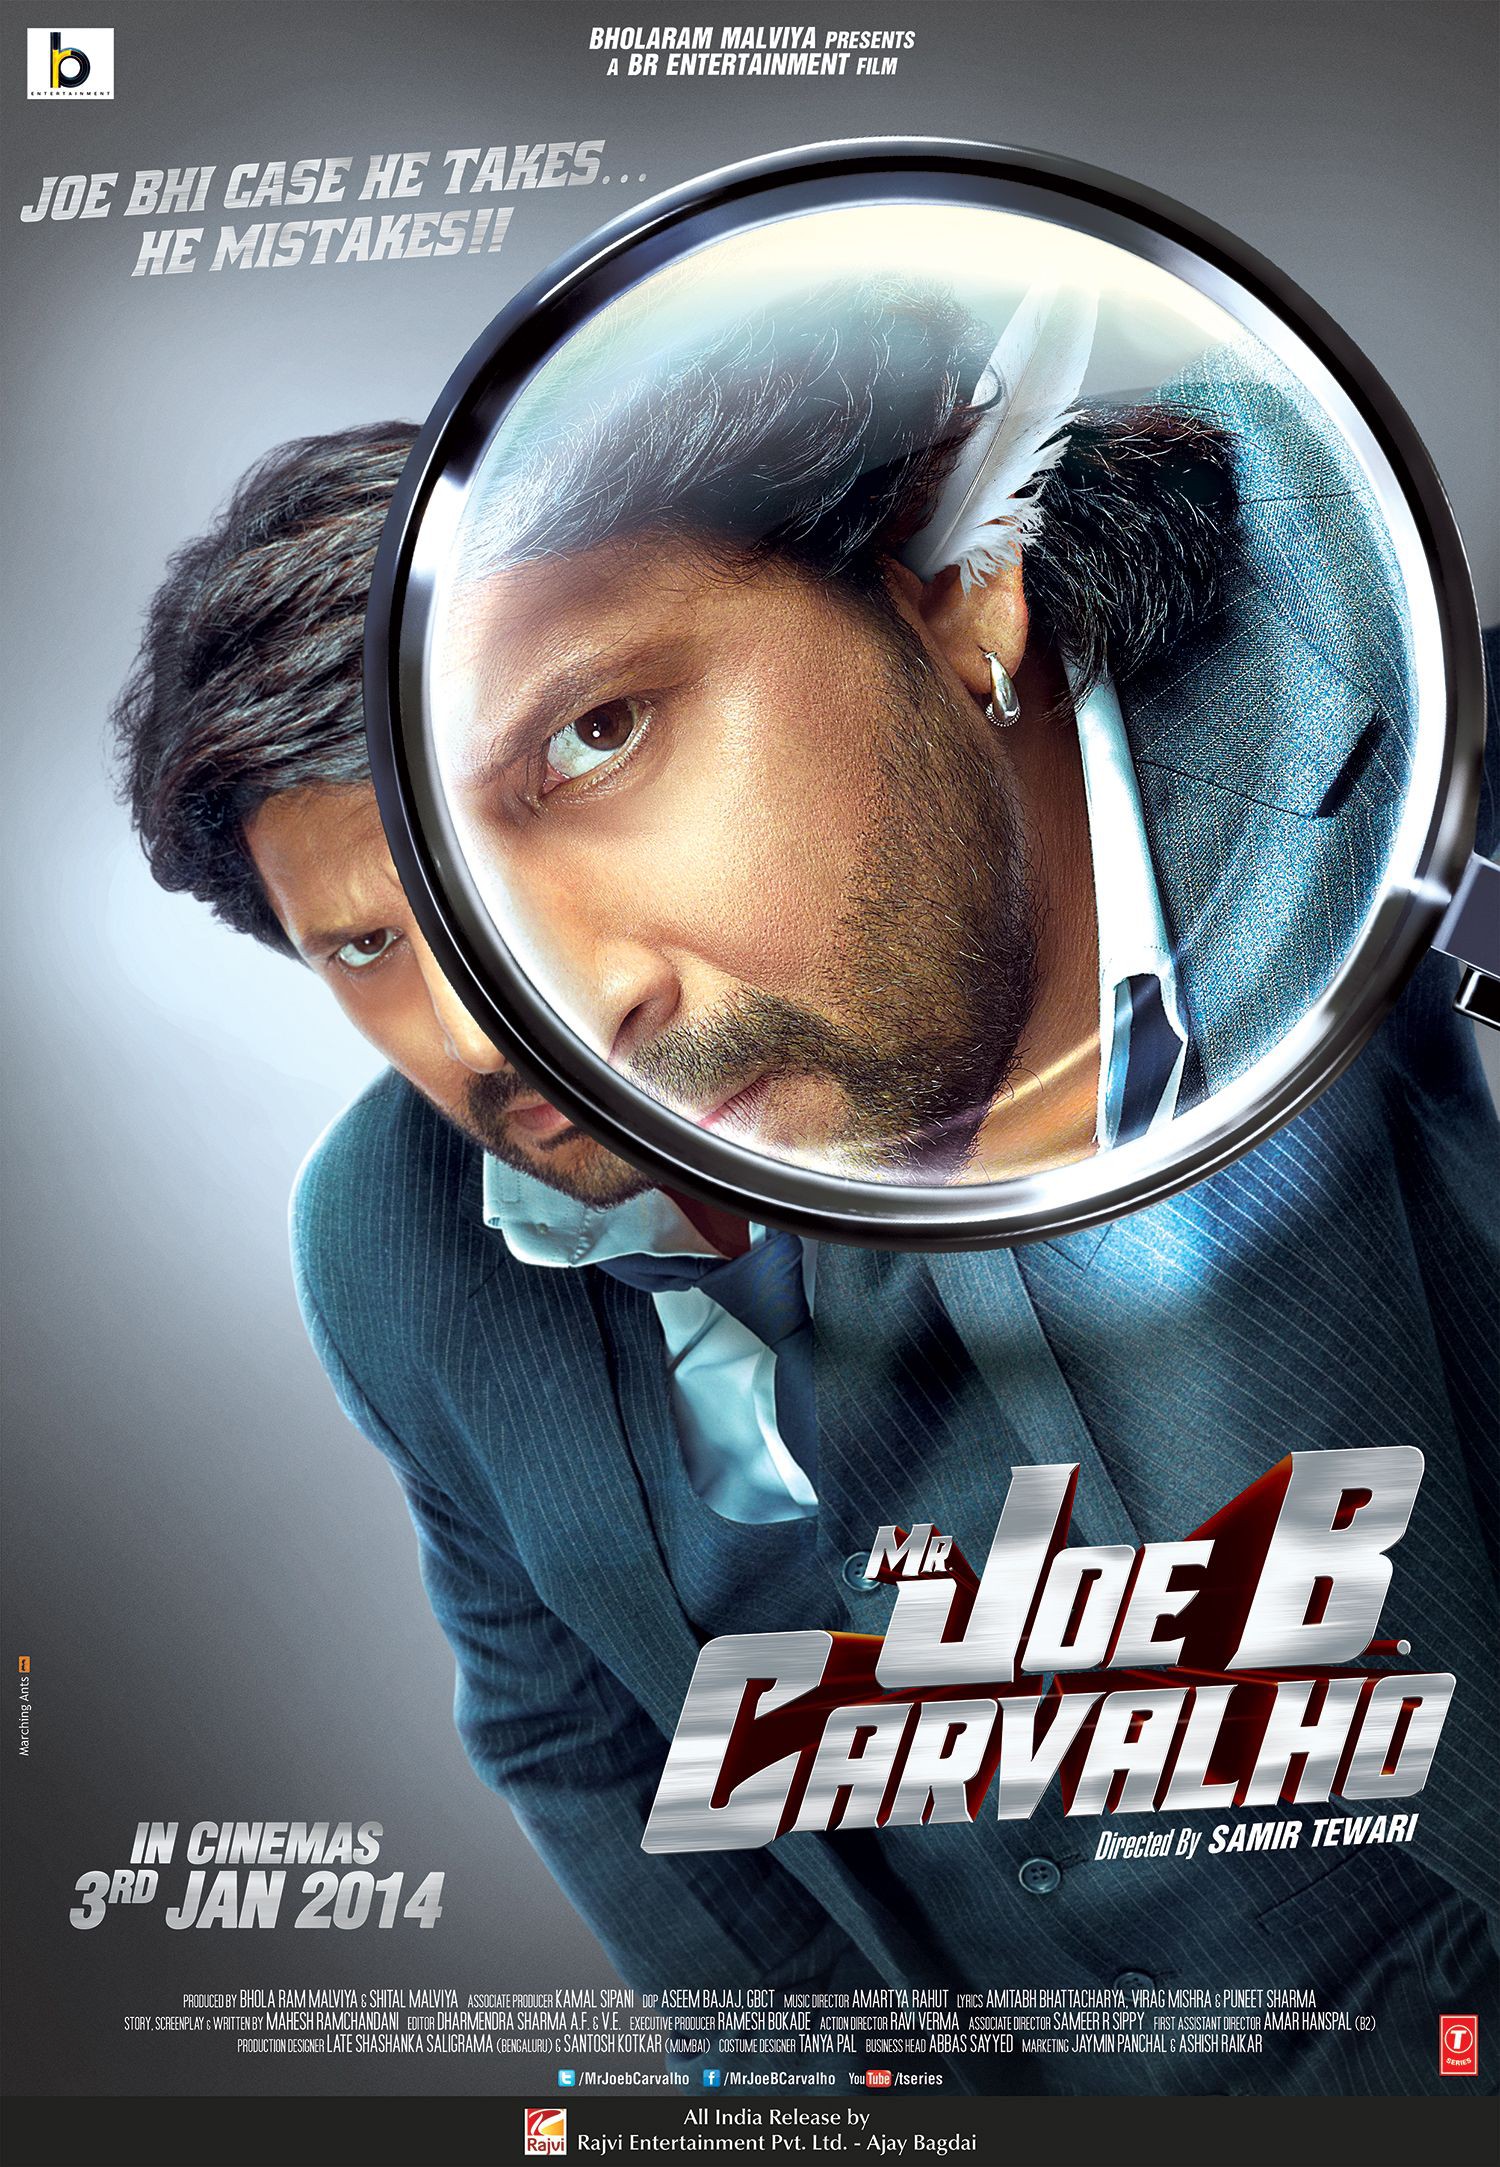 Mega Sized Movie Poster Image for Calling Mr. Joe B Carvalho (#2 of 5)